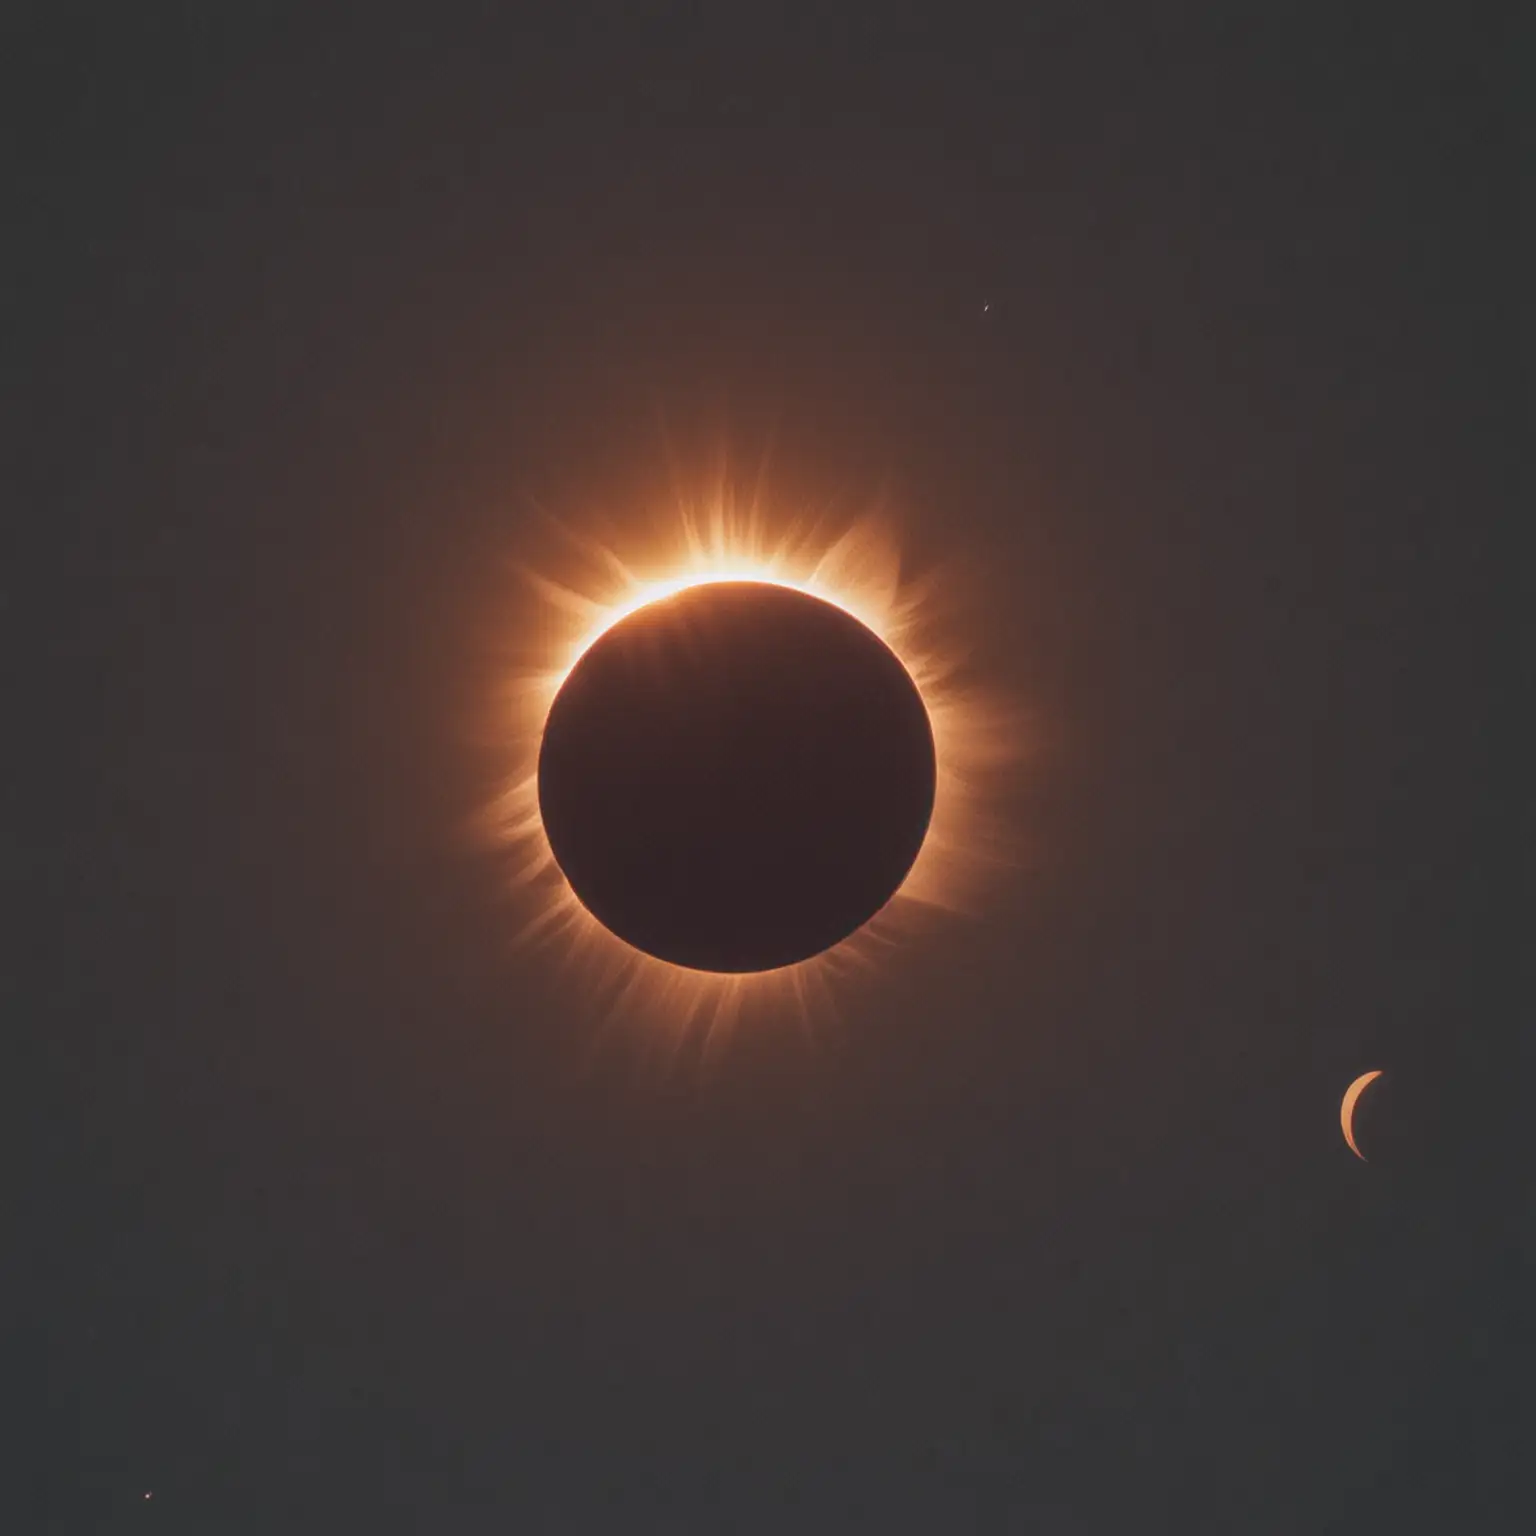 Dramatic Full Solar Eclipse Captured in Vivid Detail